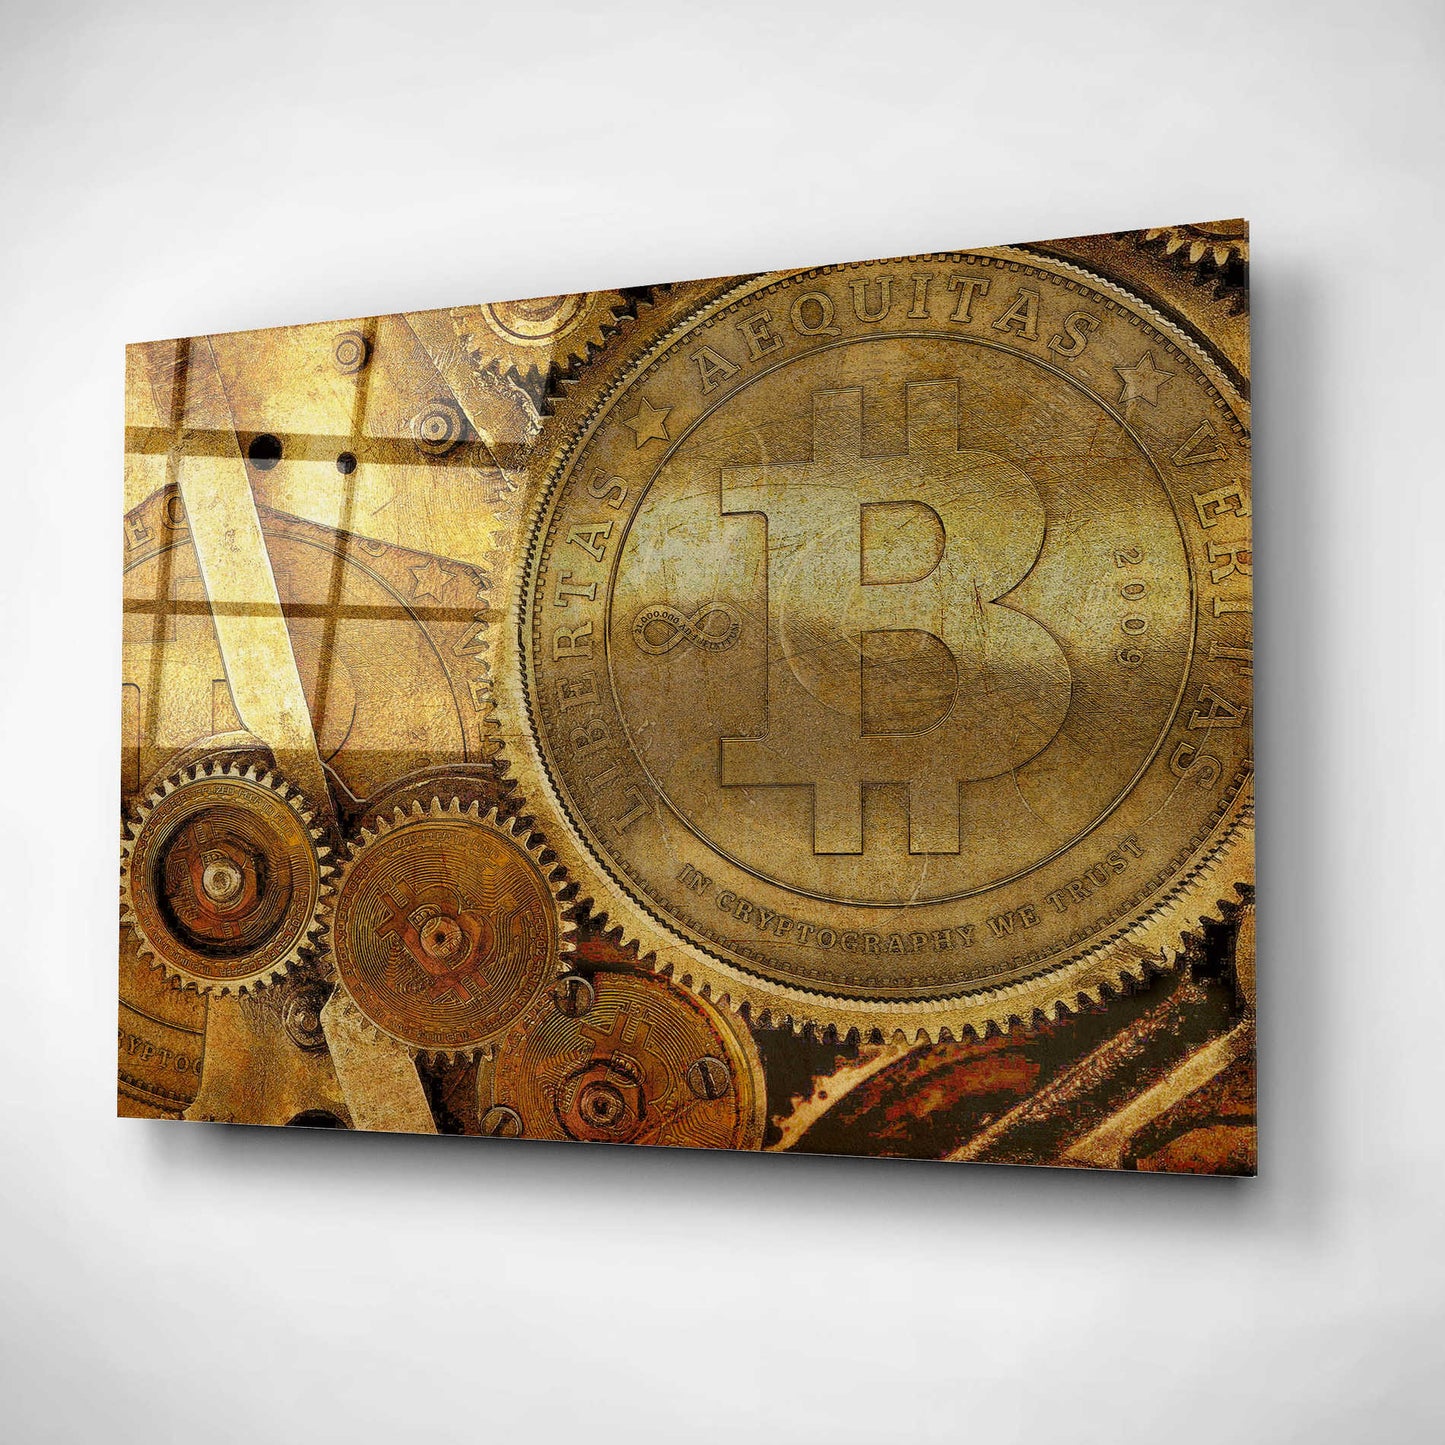 Epic Art 'Grunge Bitcoin One' by Steve Hunziker, Acrlic Glass Wall Art,24x16